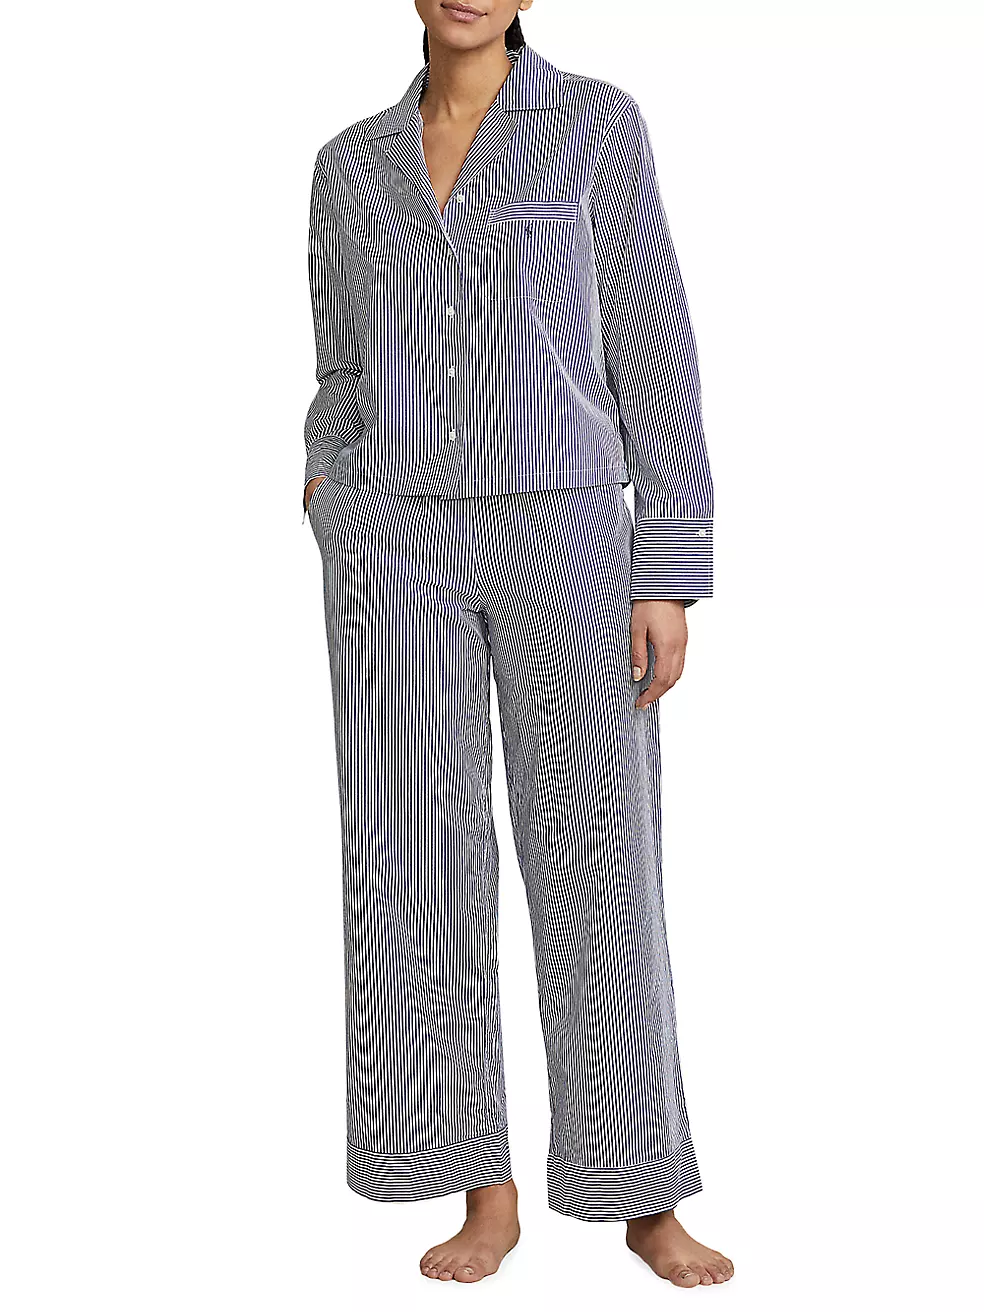 Bees 'n Stripes Gucci-Inspired Long Sleeved Satin Pyjama Set